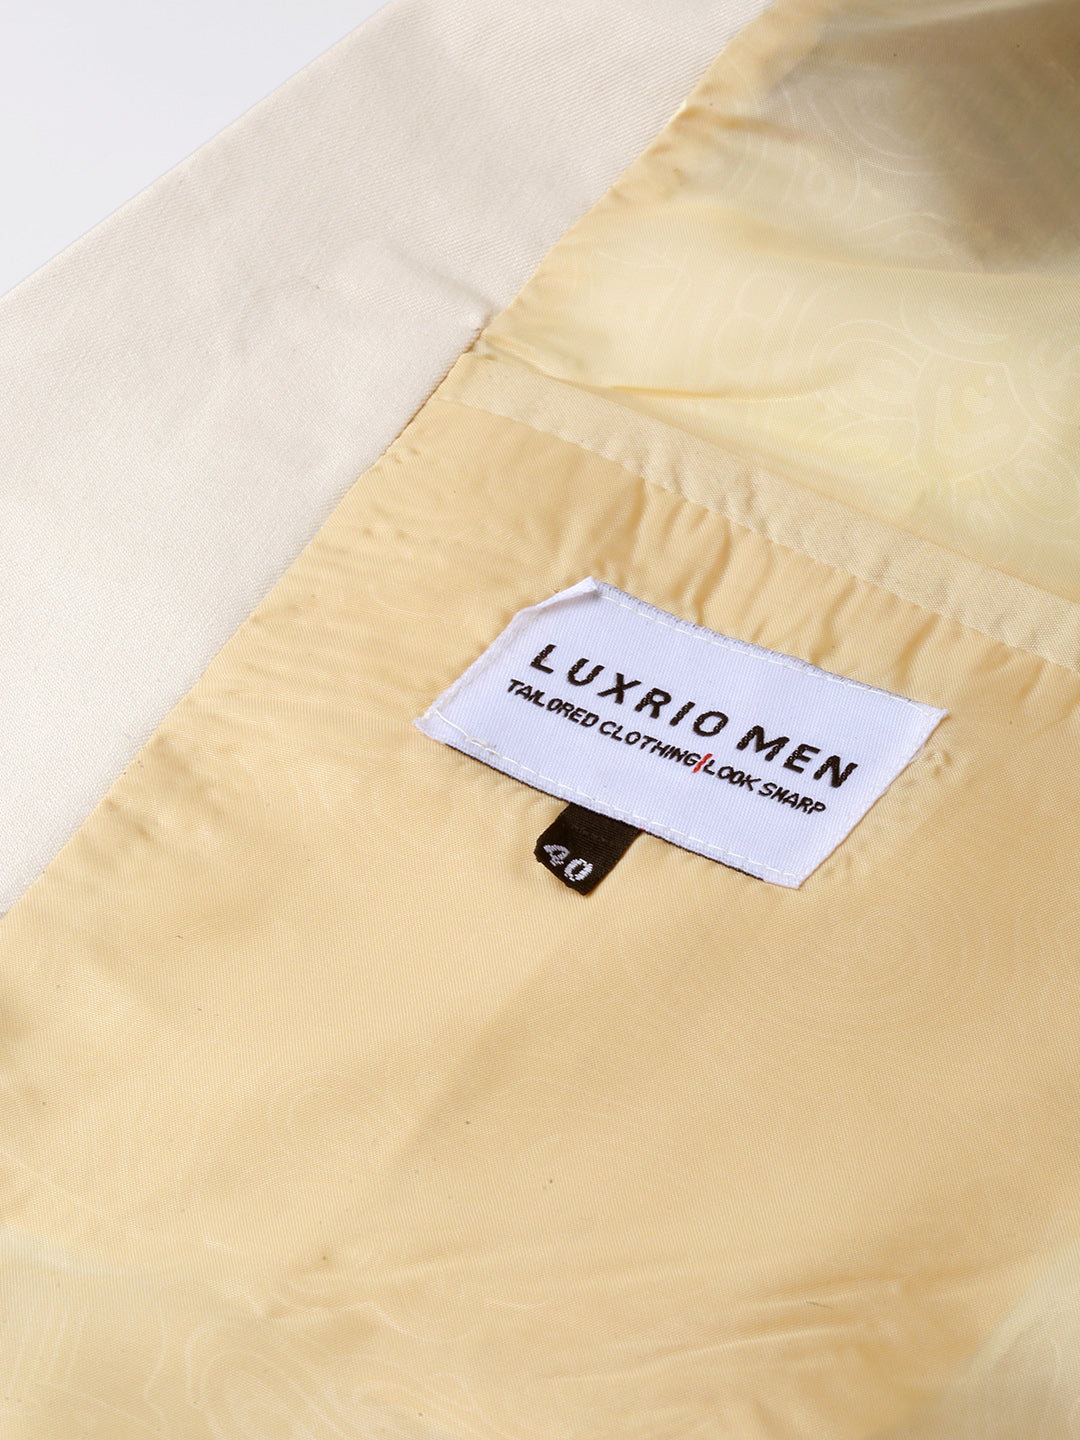 Luxrio Plain Blazer for Men Polyester & Cotton Casual Party Wear Slim Fit Jacket